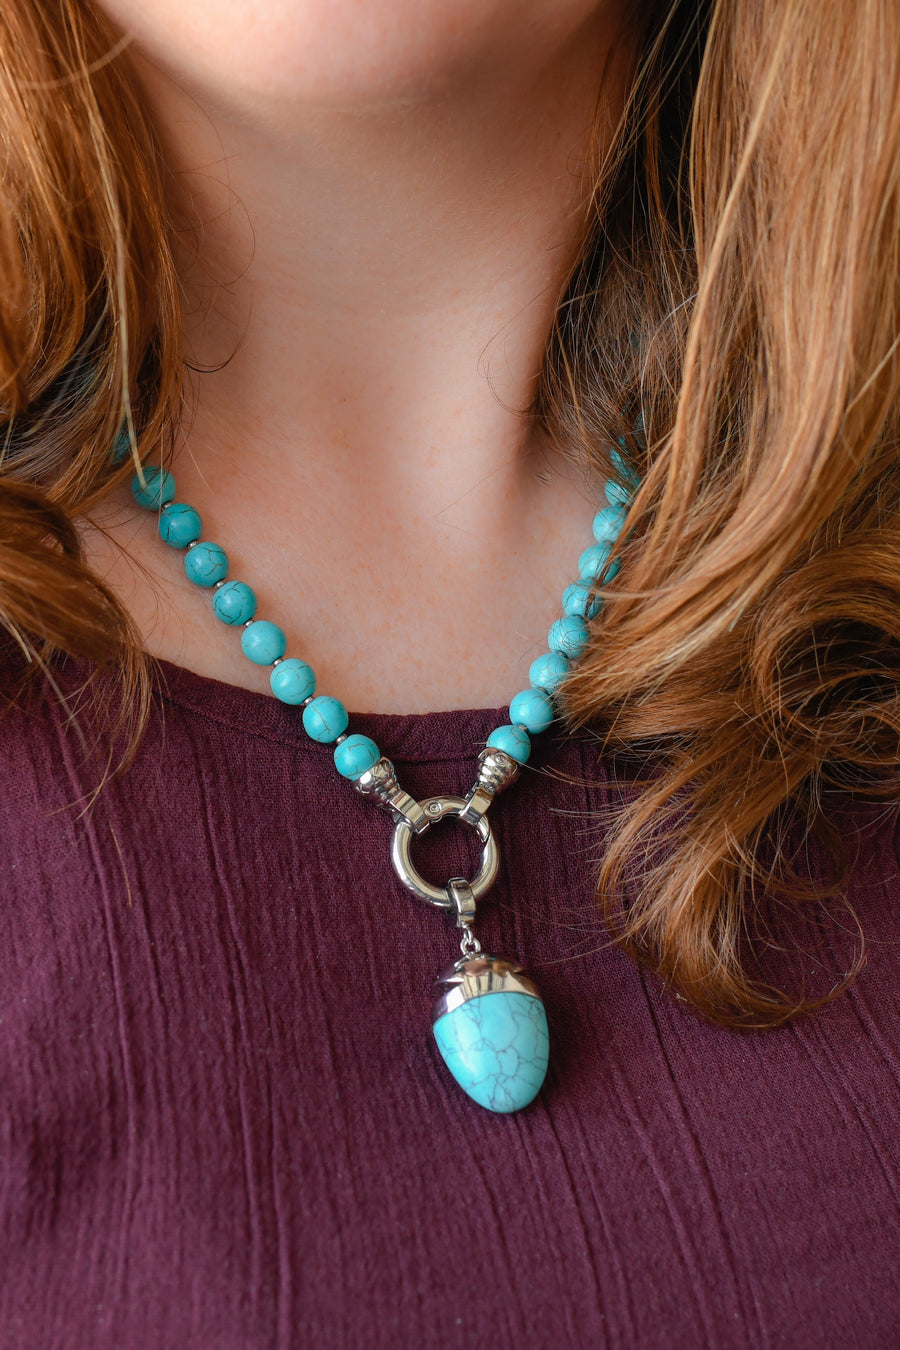 Turquoise Petite Necklace 49cm